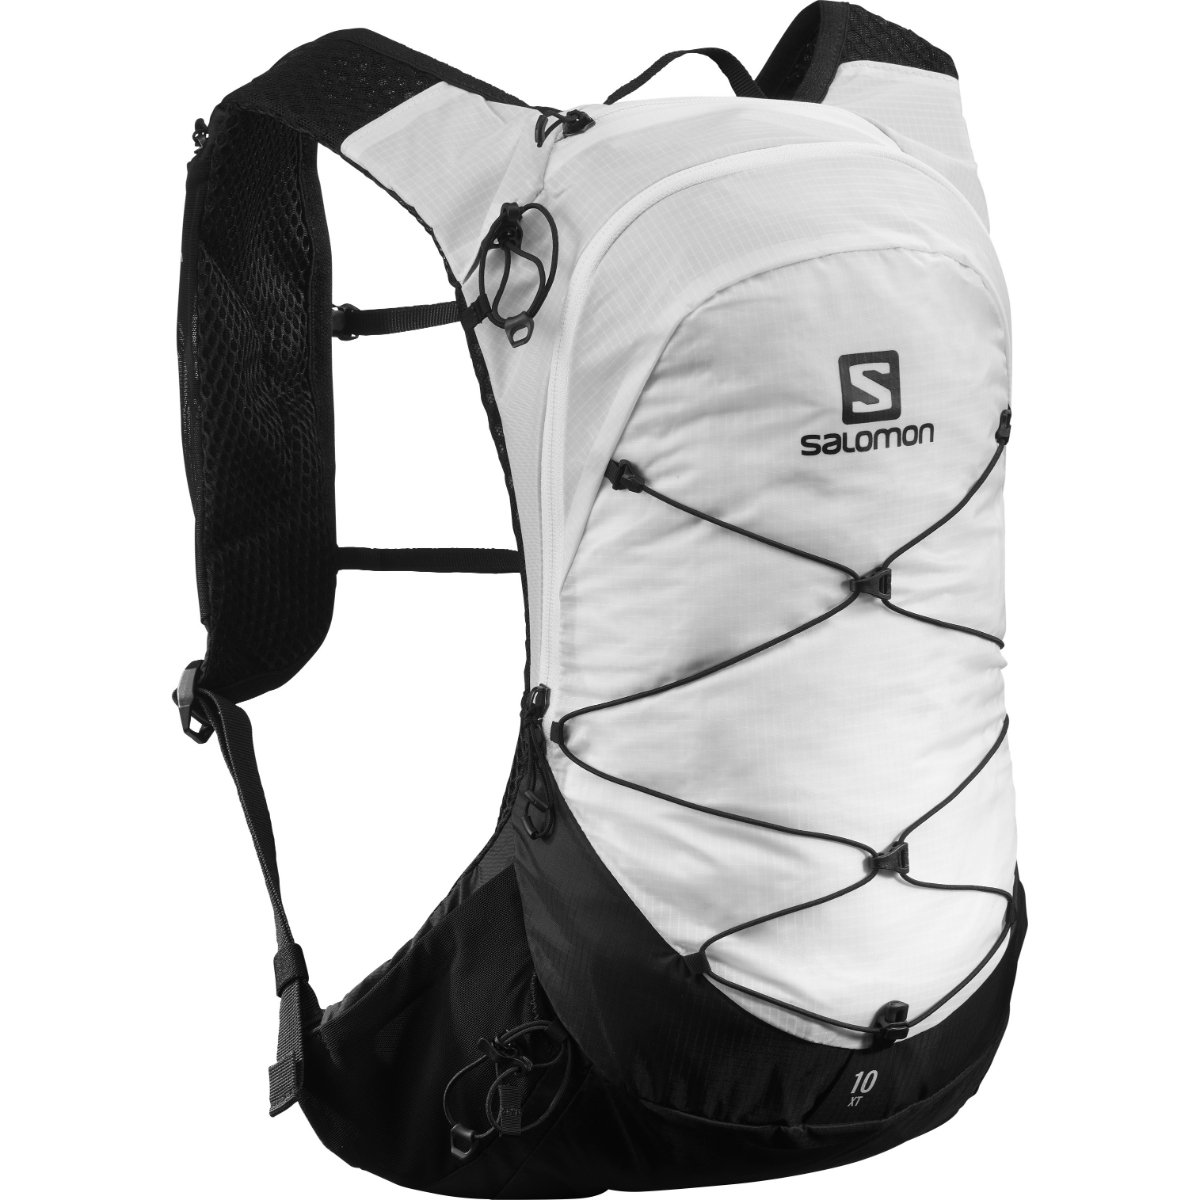 Billy Goat uitzondering doos Salomon XT 10 Hiking Bag | Christy Sports